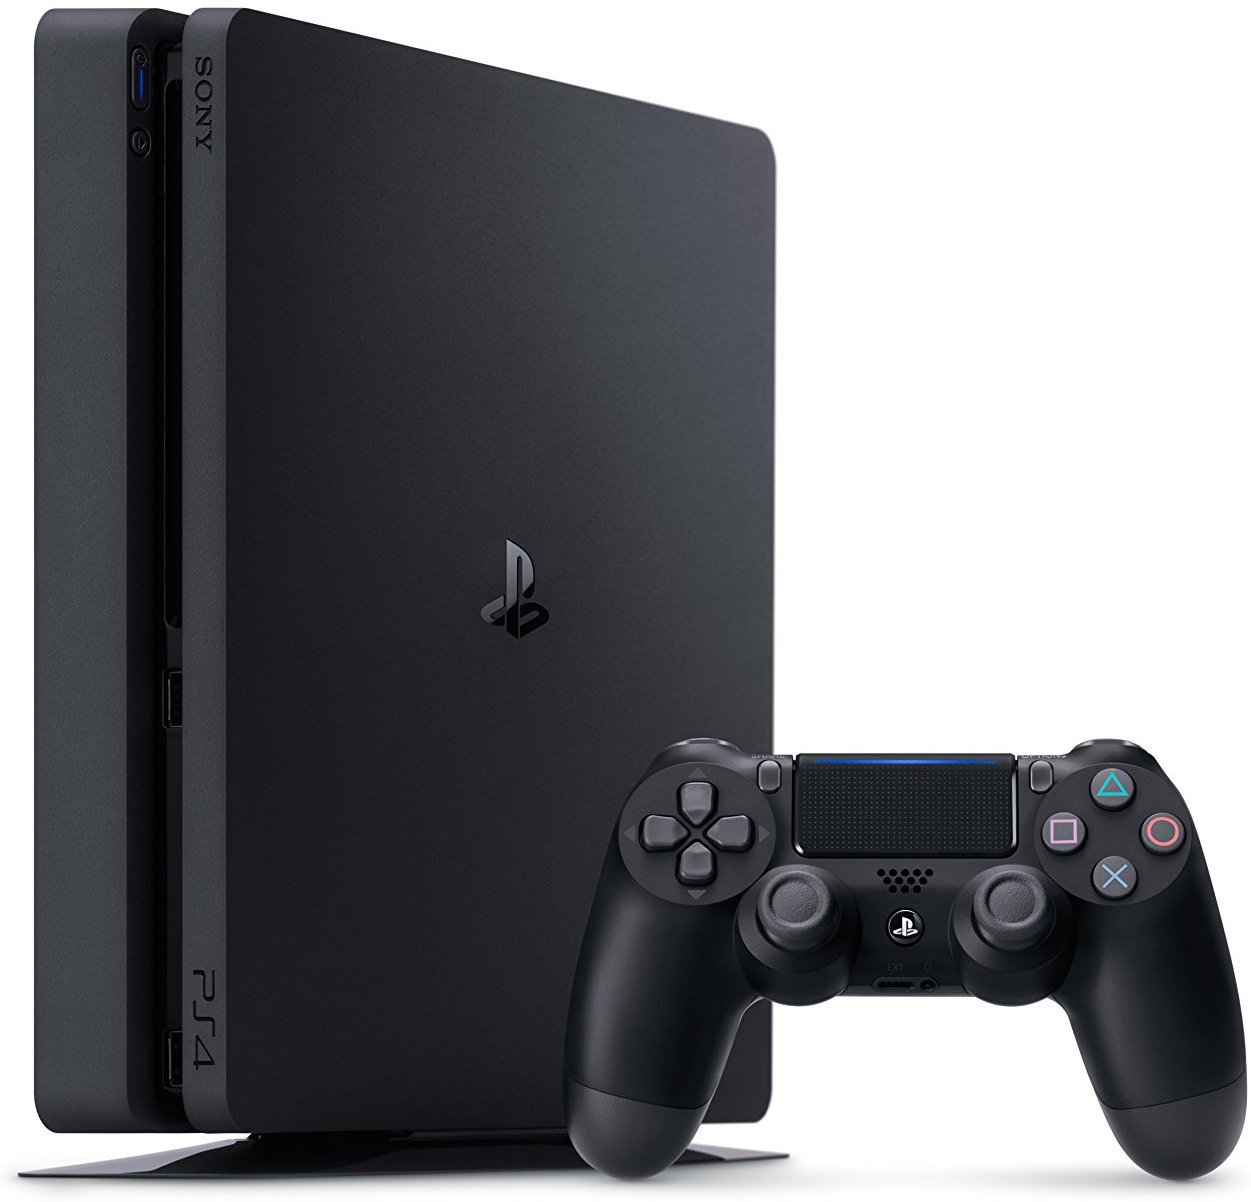 Sony PlayStation 4 Slim 1TB Gaming Console, Black, CUH-2115B - image 1 of 9